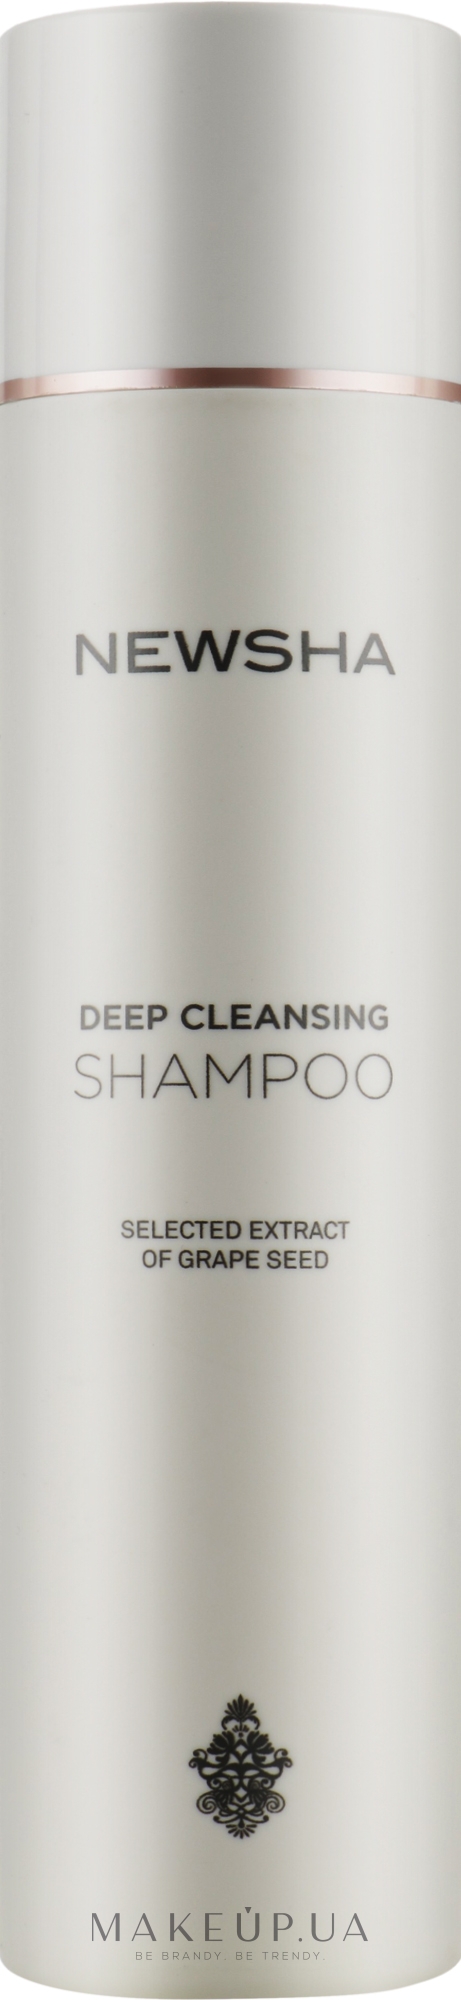 Шампунь для глубокого очищения - Newsha Classic Deep Cleansing Shampoo — фото 250ml